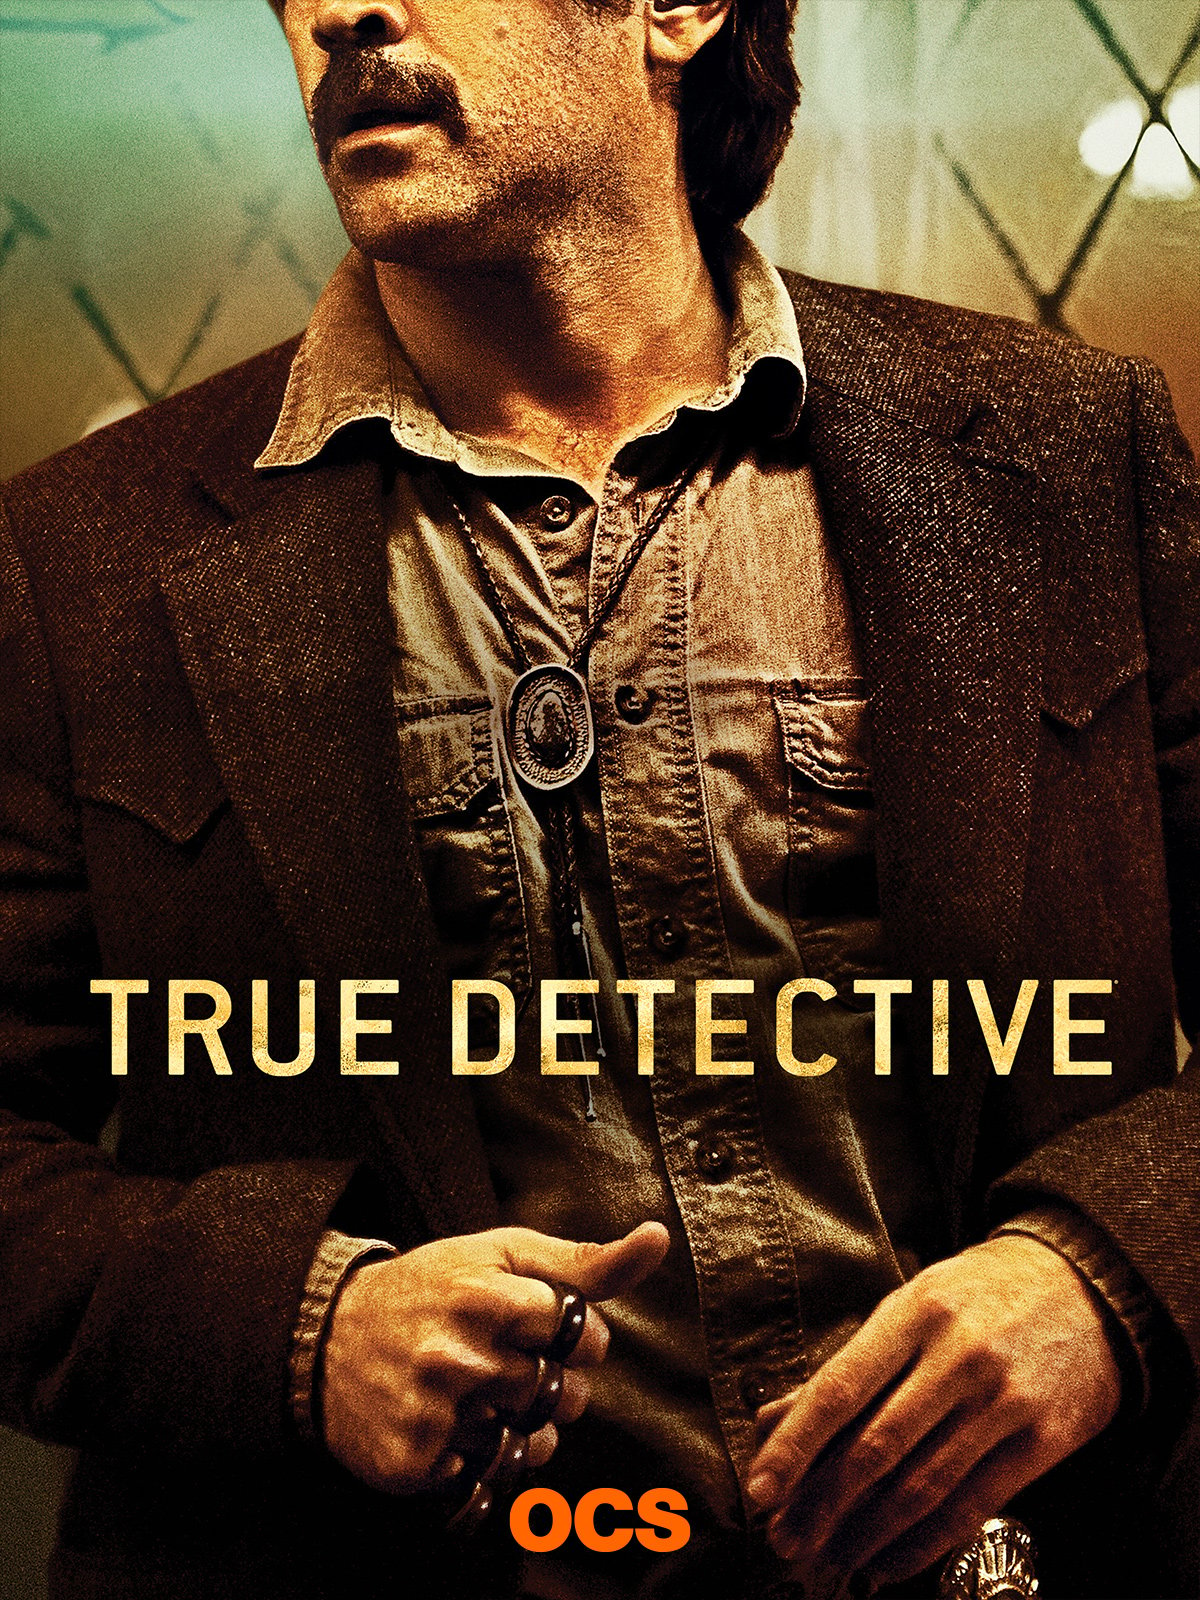 true detective season 1 trailer